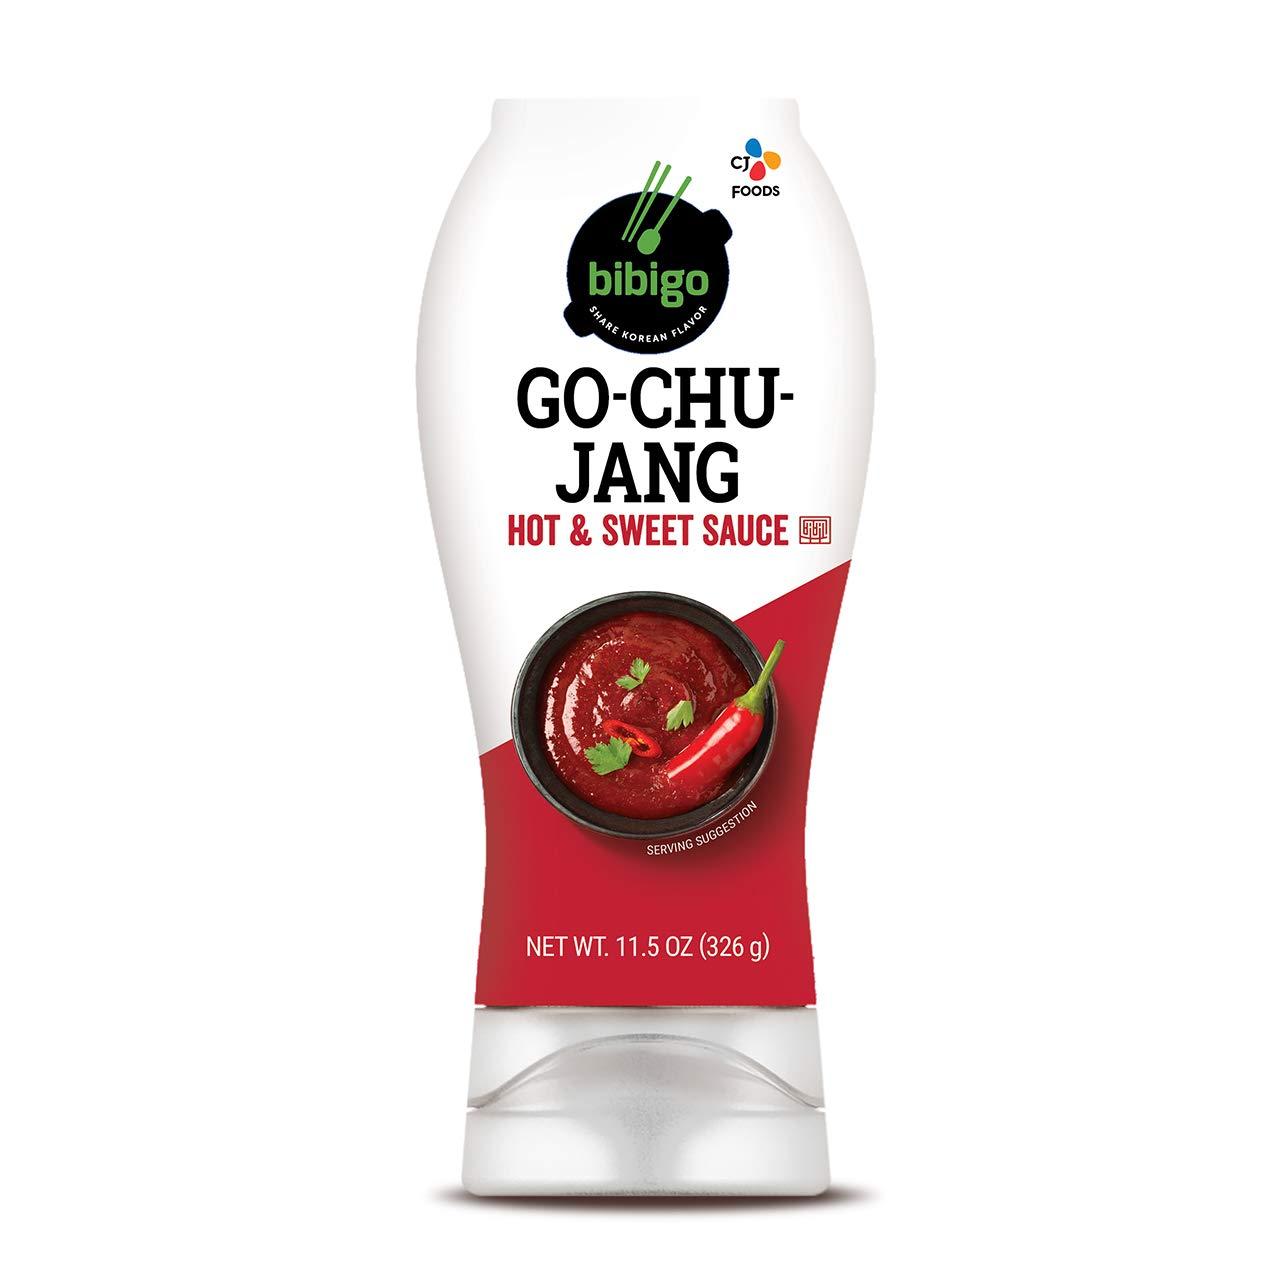 Bibigo Gochujang Hot and Sweet Sauce for $2.79 Shipped